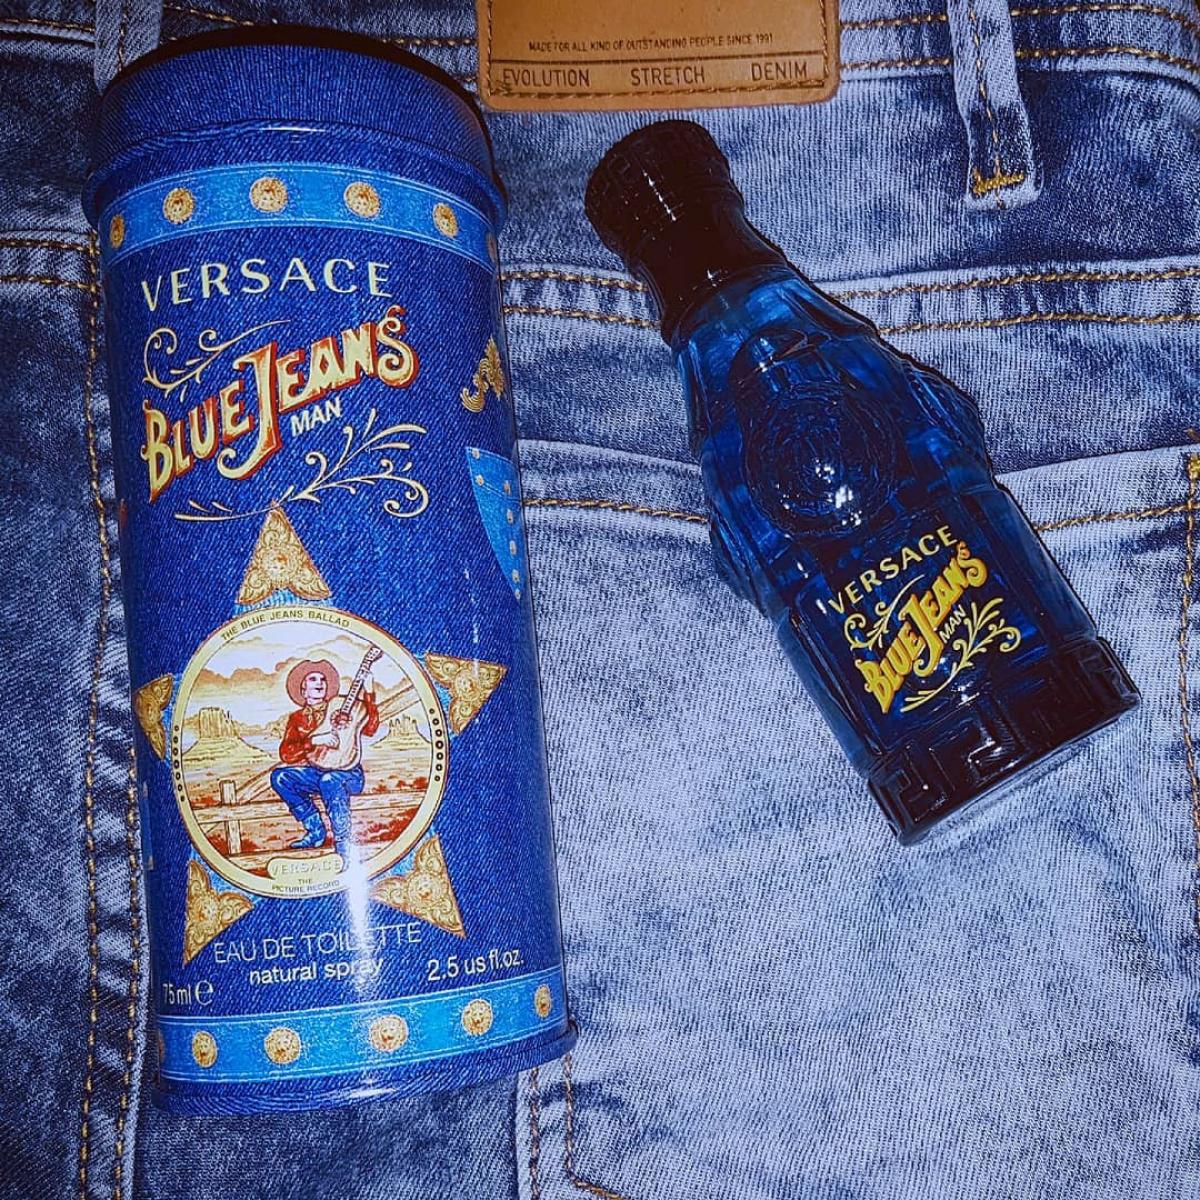 Blue Jeans Versace cologne - a fragrance for men 1994